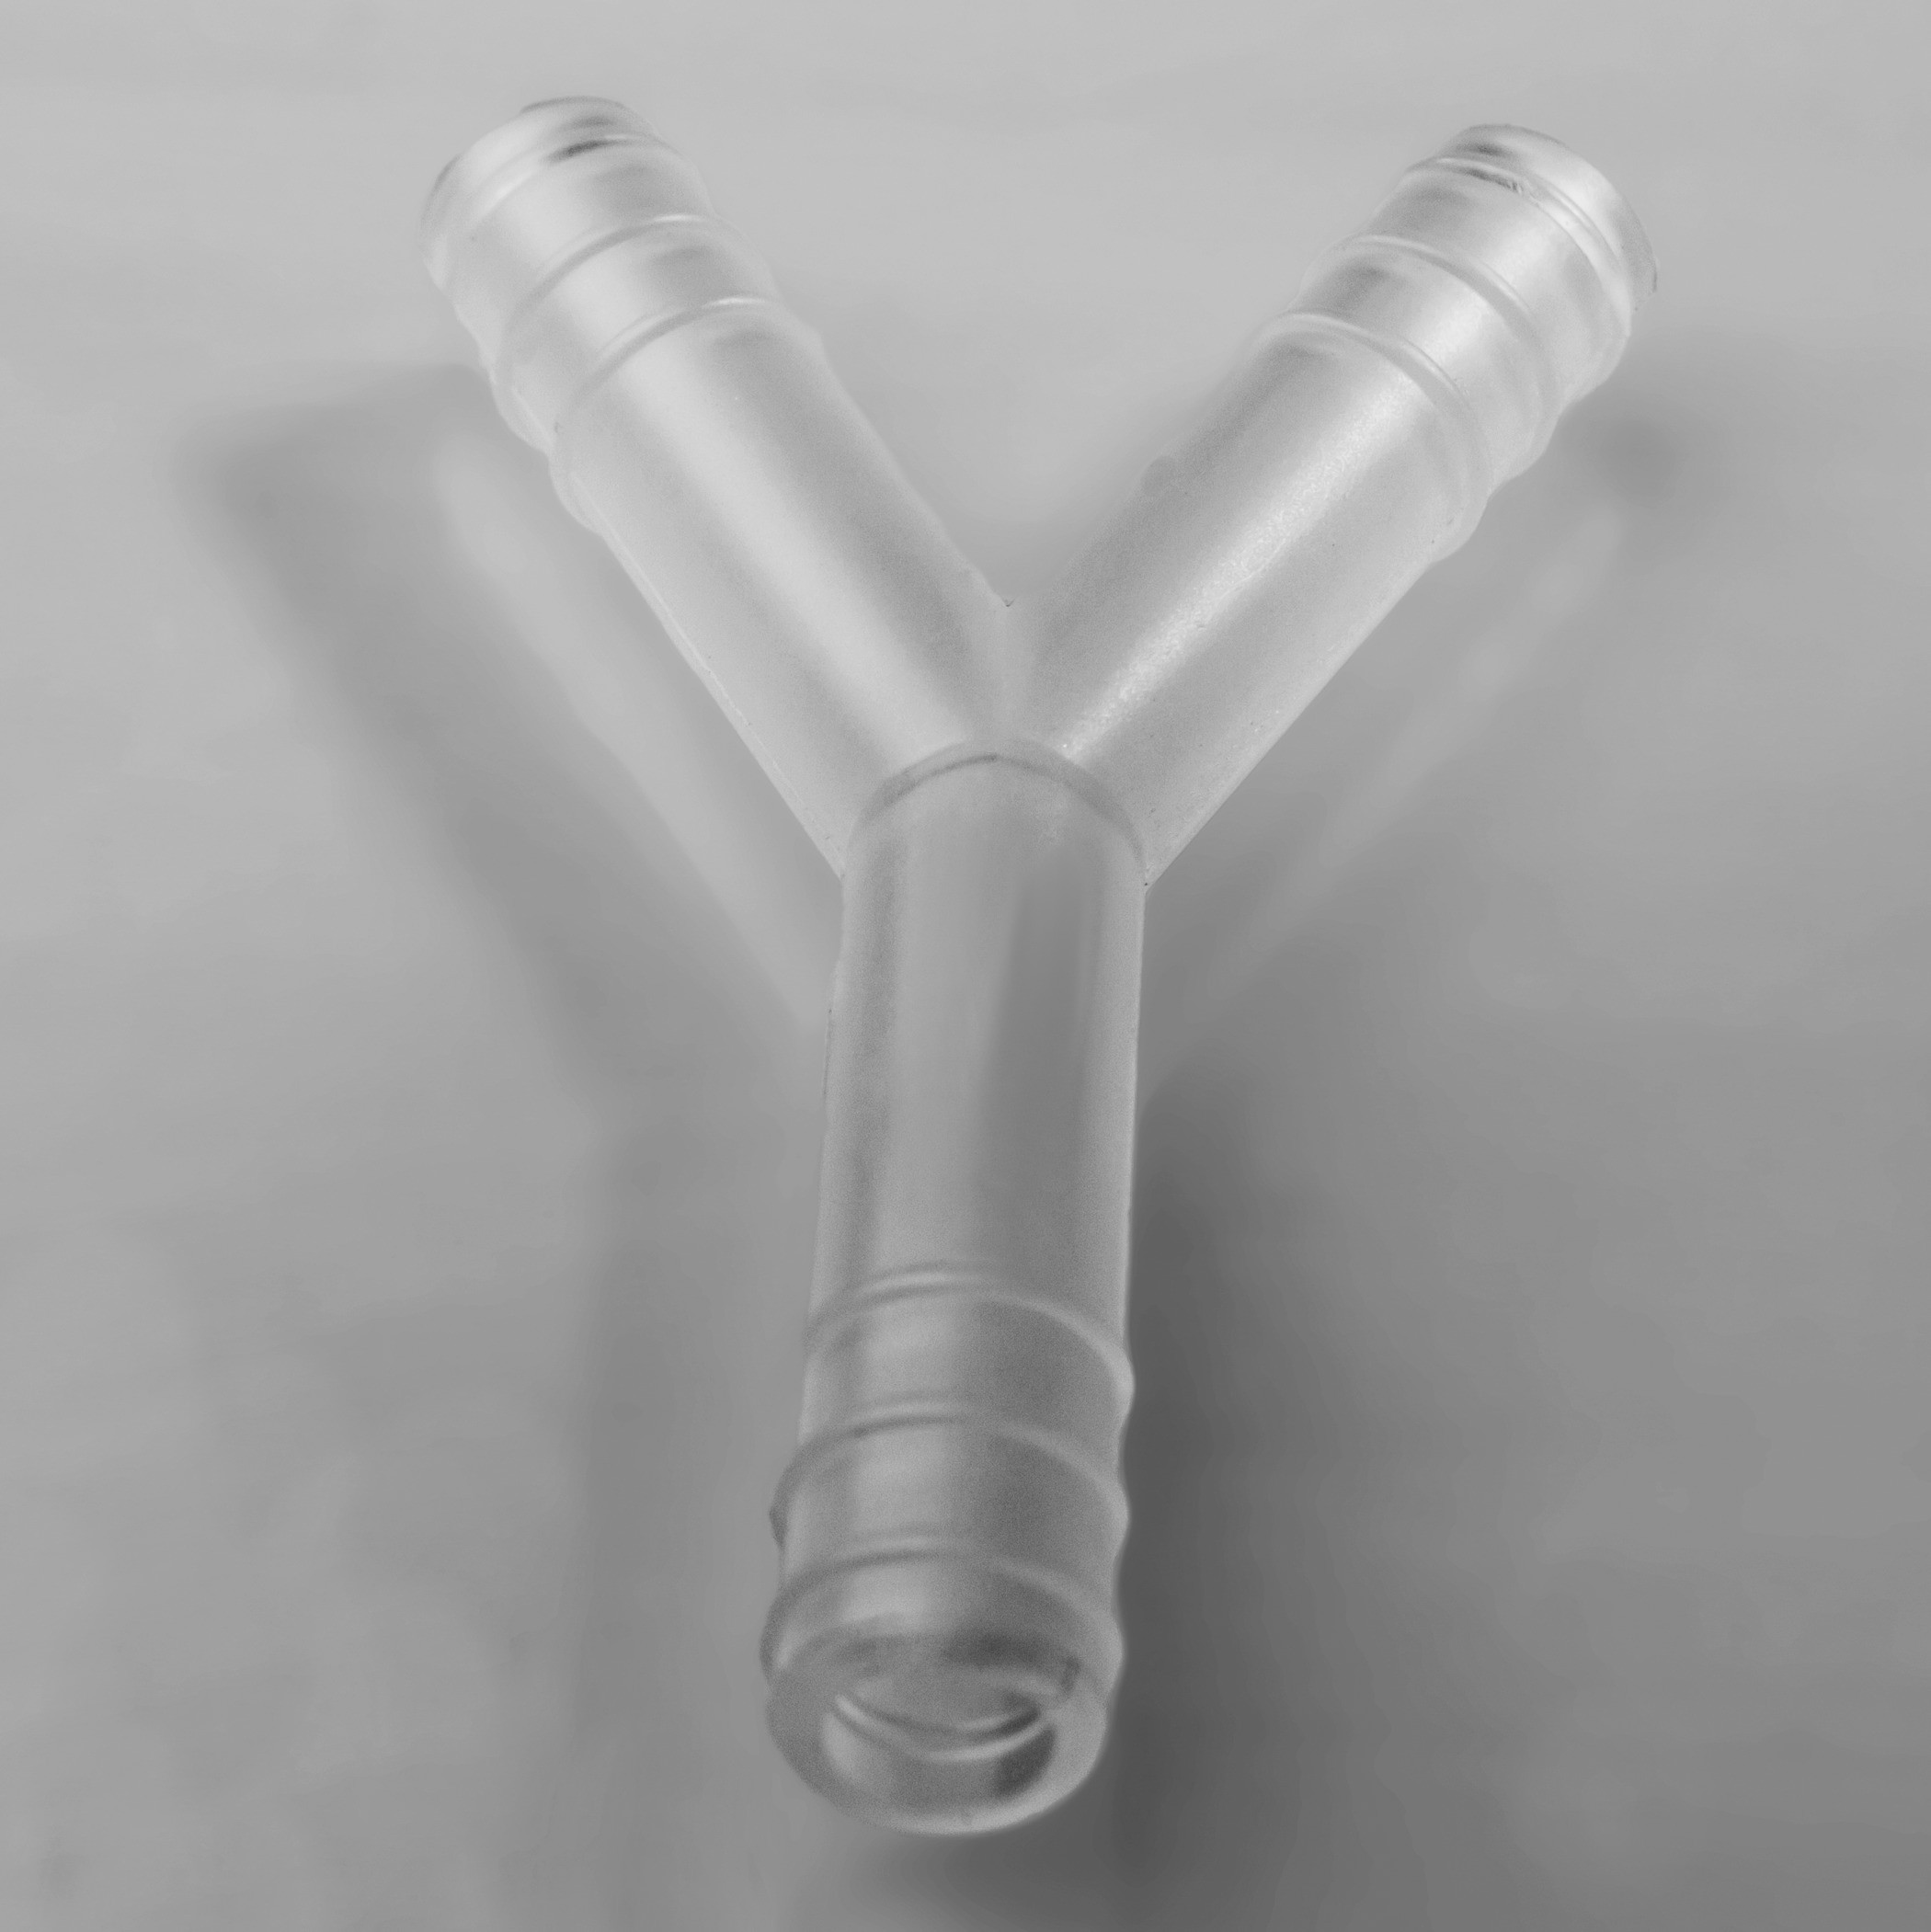 Pack of 12 Y F19614-0000 Bel-Art Wye Tubing; Polypropylene Tubing Connectors for ¼ in 